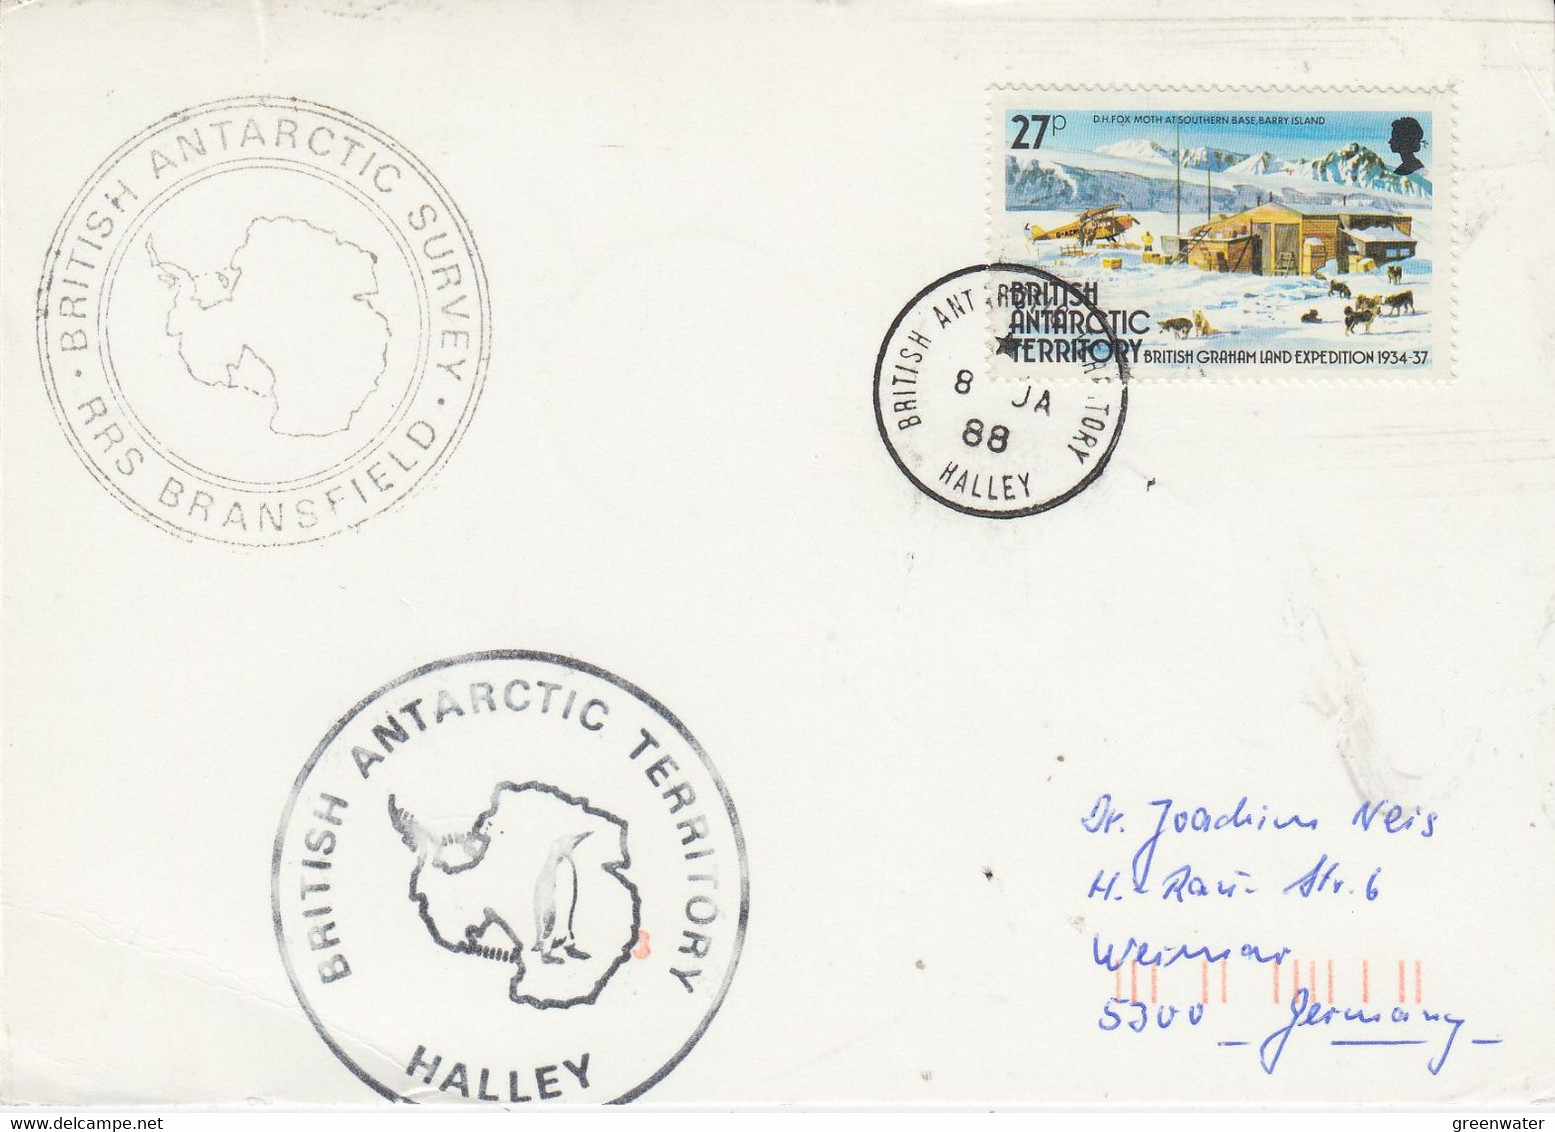 British Antarctic Territory (BAT) Card CaHalley 8 JA 1988 (AT162) - Covers & Documents